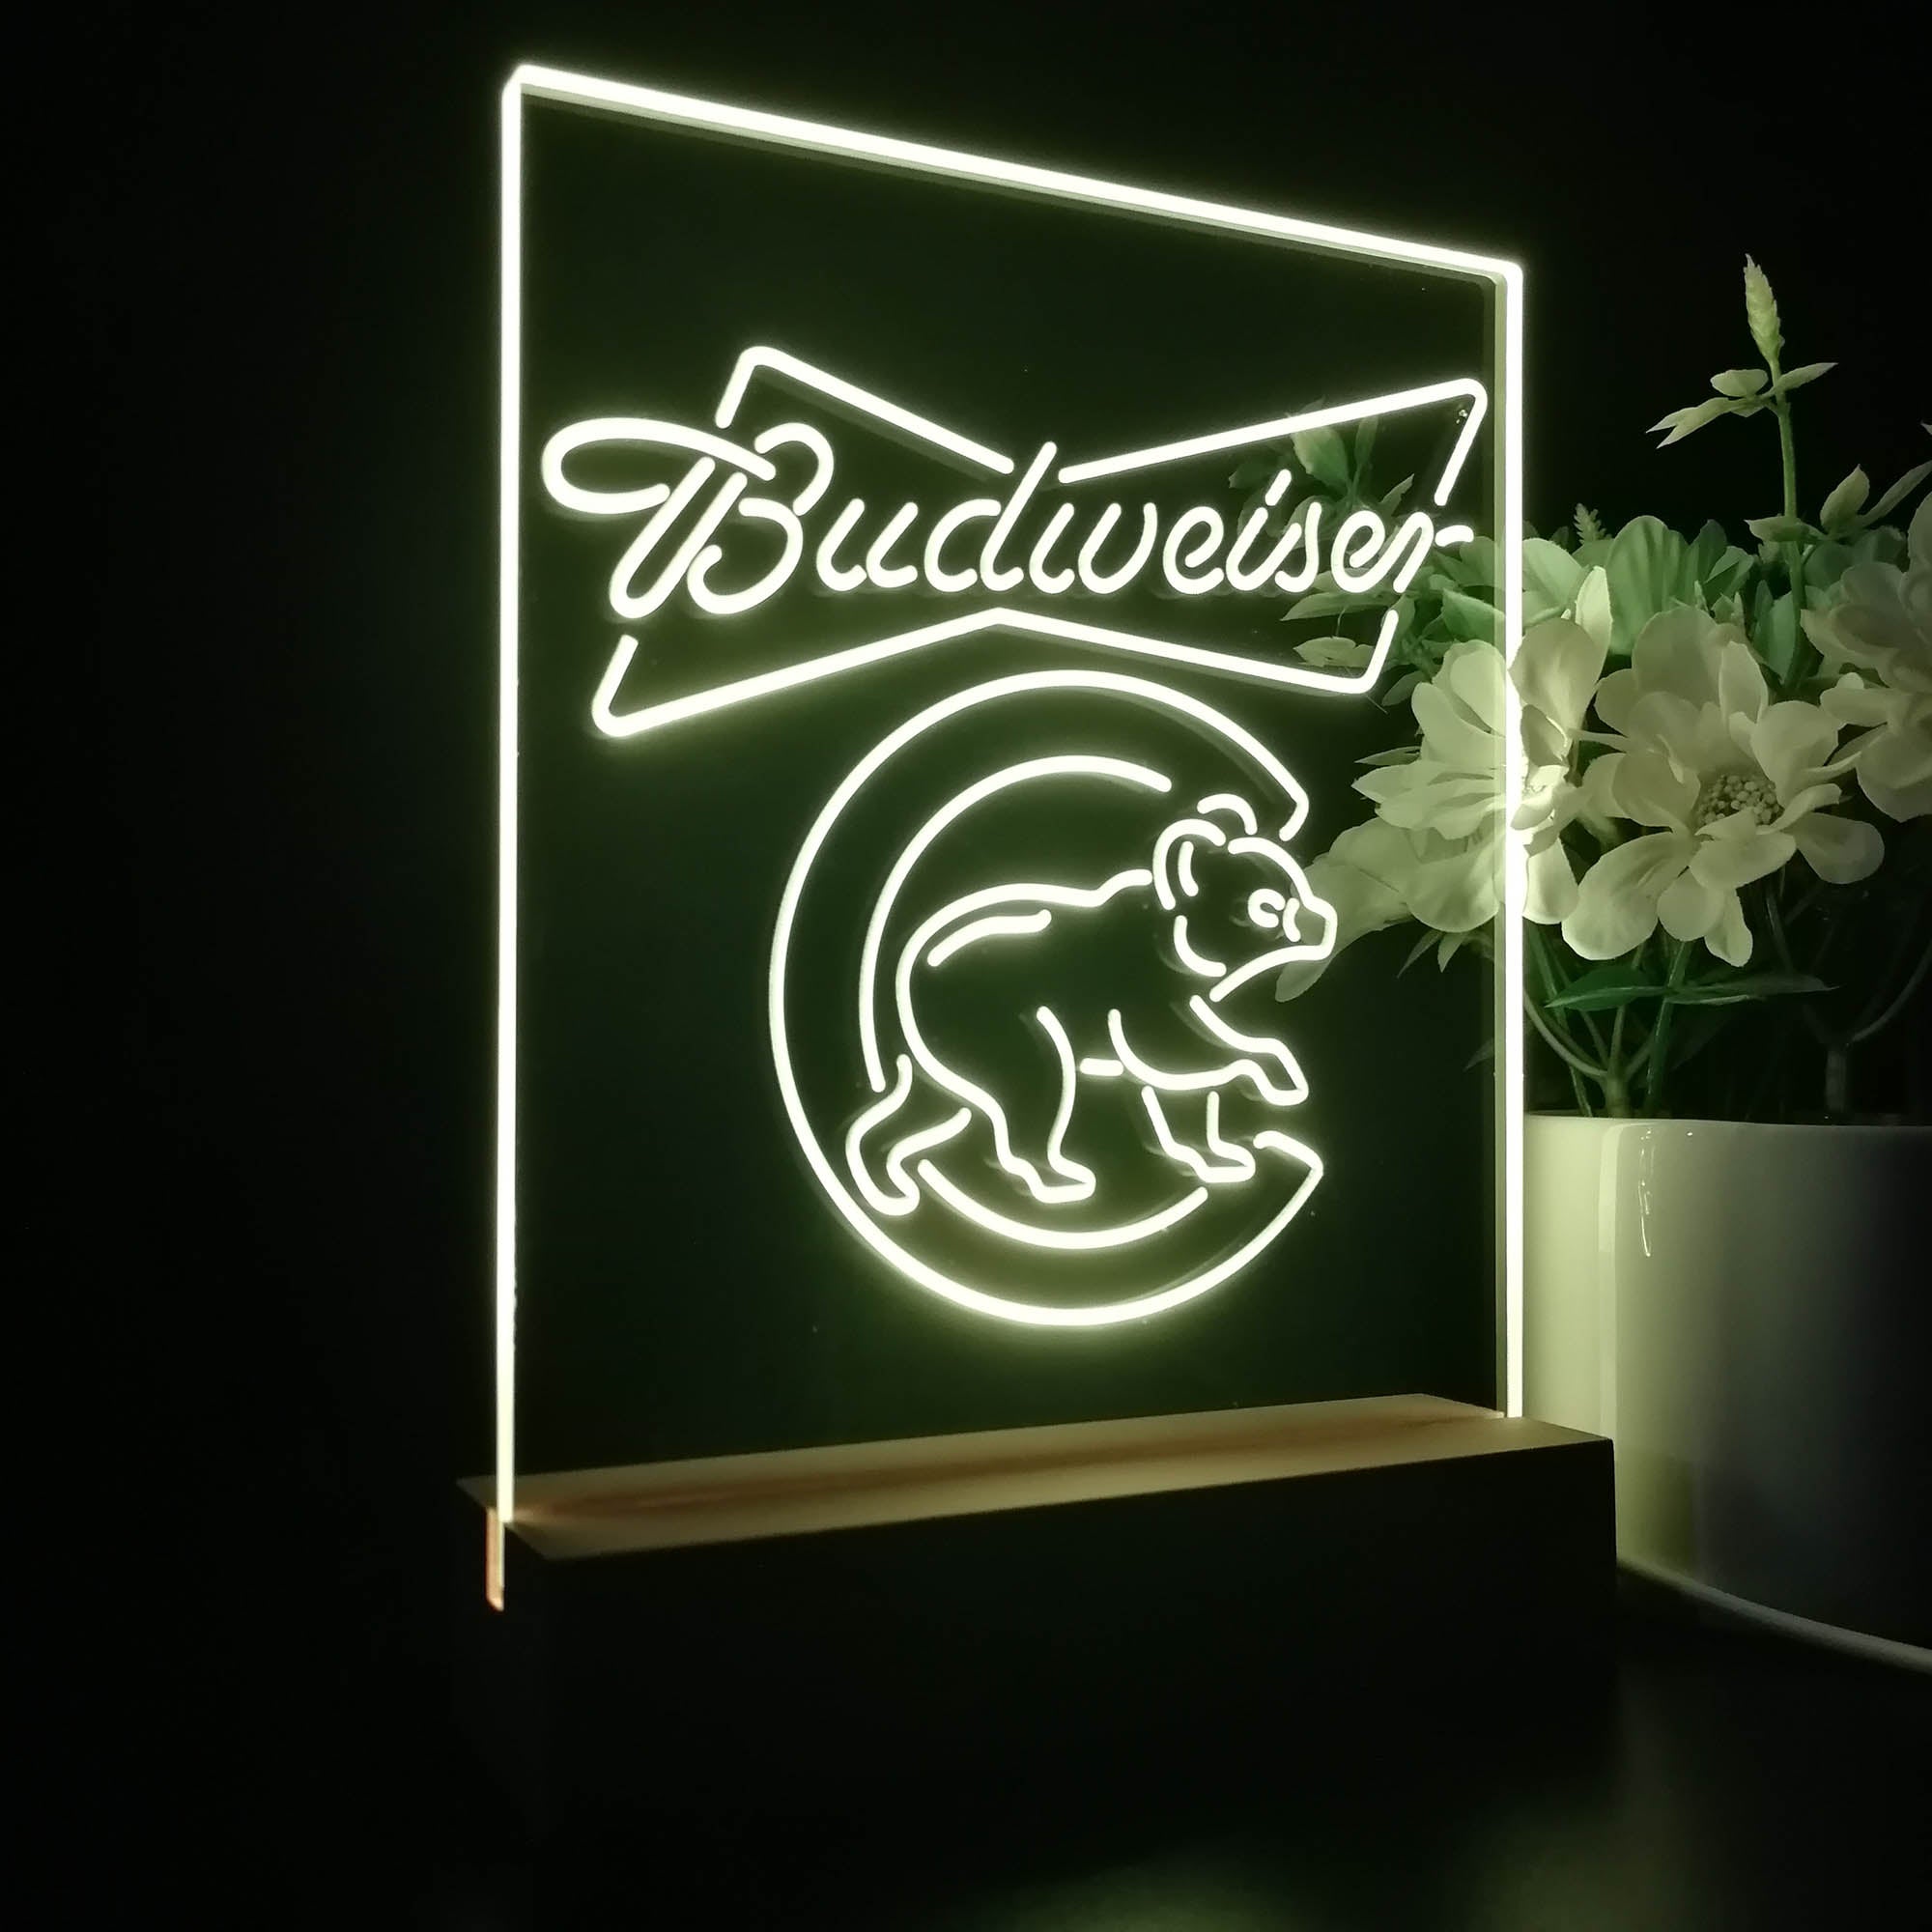 Chicago Bears Budweiser 3D LED Optical Illusion Sport Team Night Light